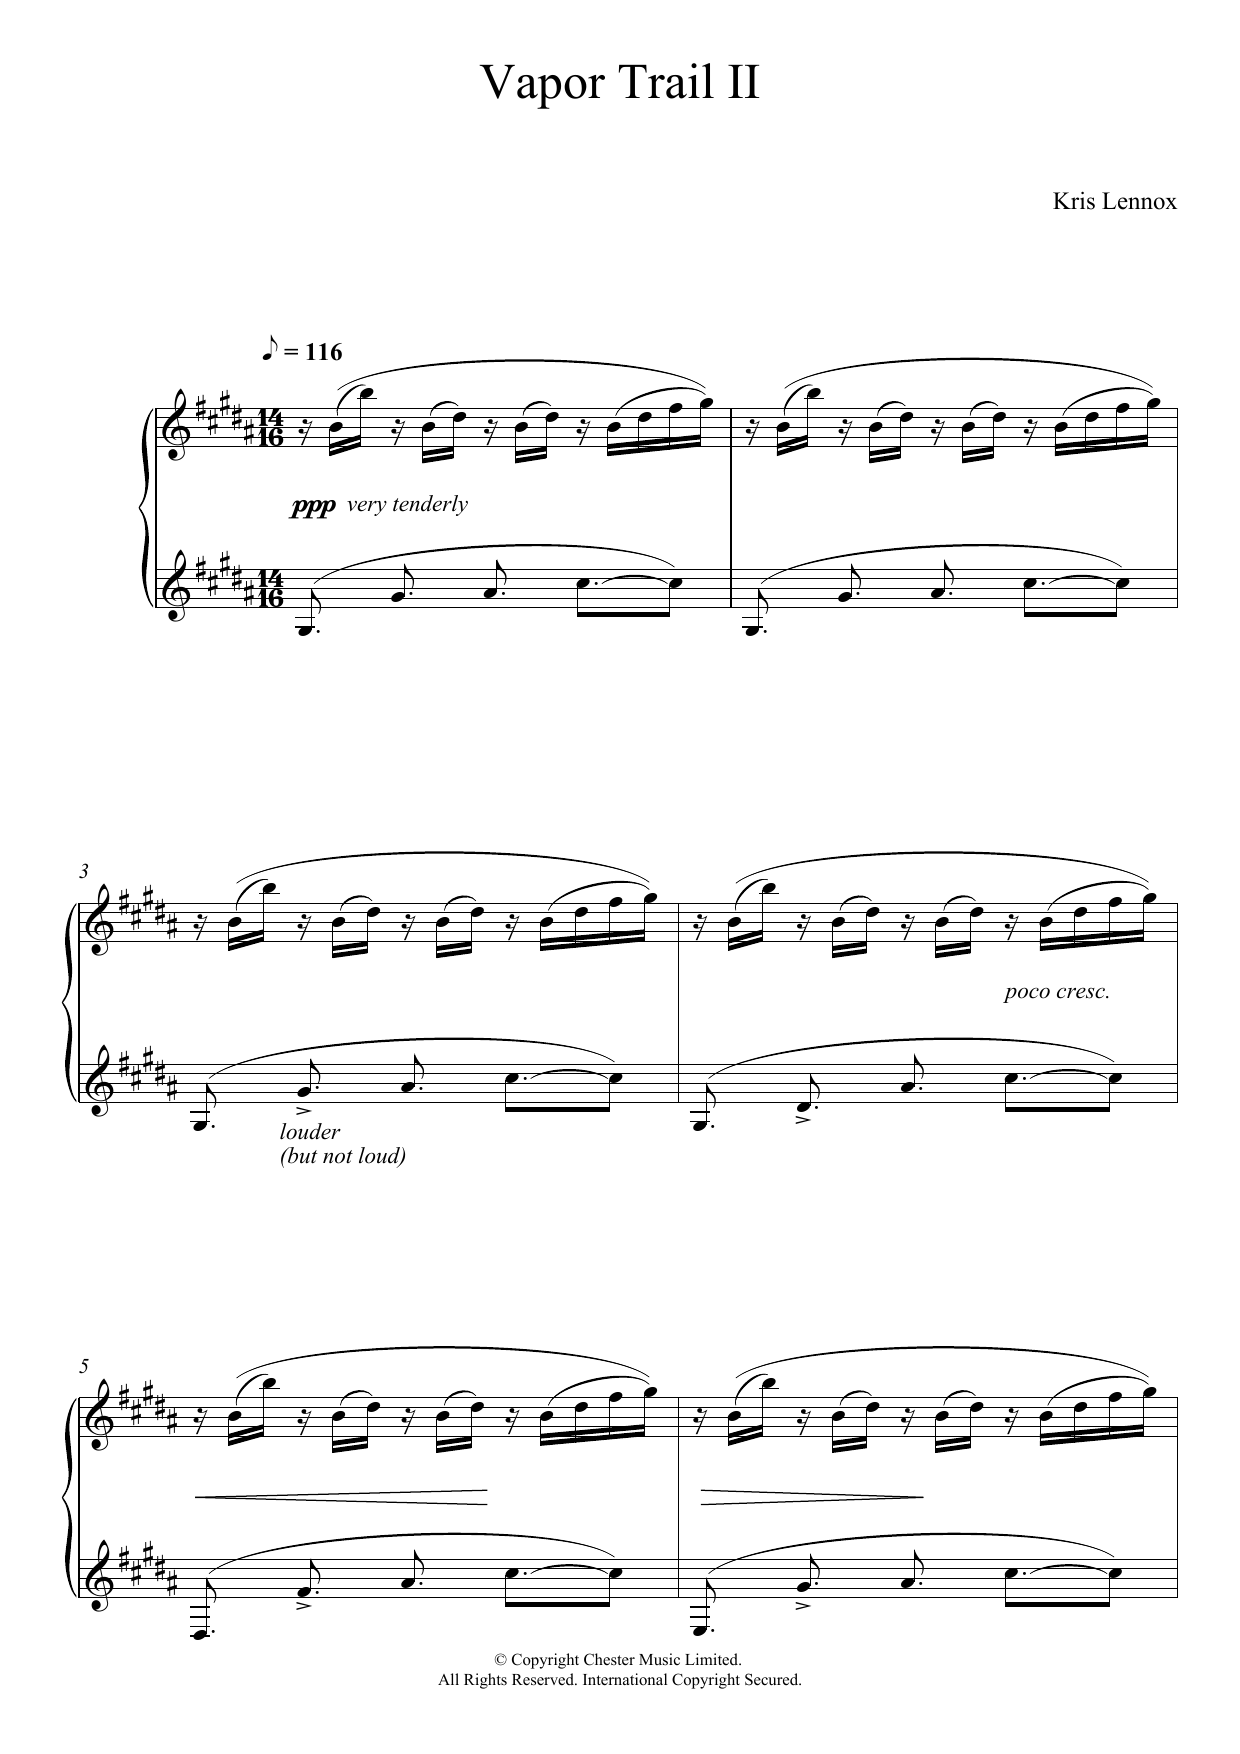 Kris Lennox Vapor Trail II Sheet Music Notes & Chords for Piano - Download or Print PDF